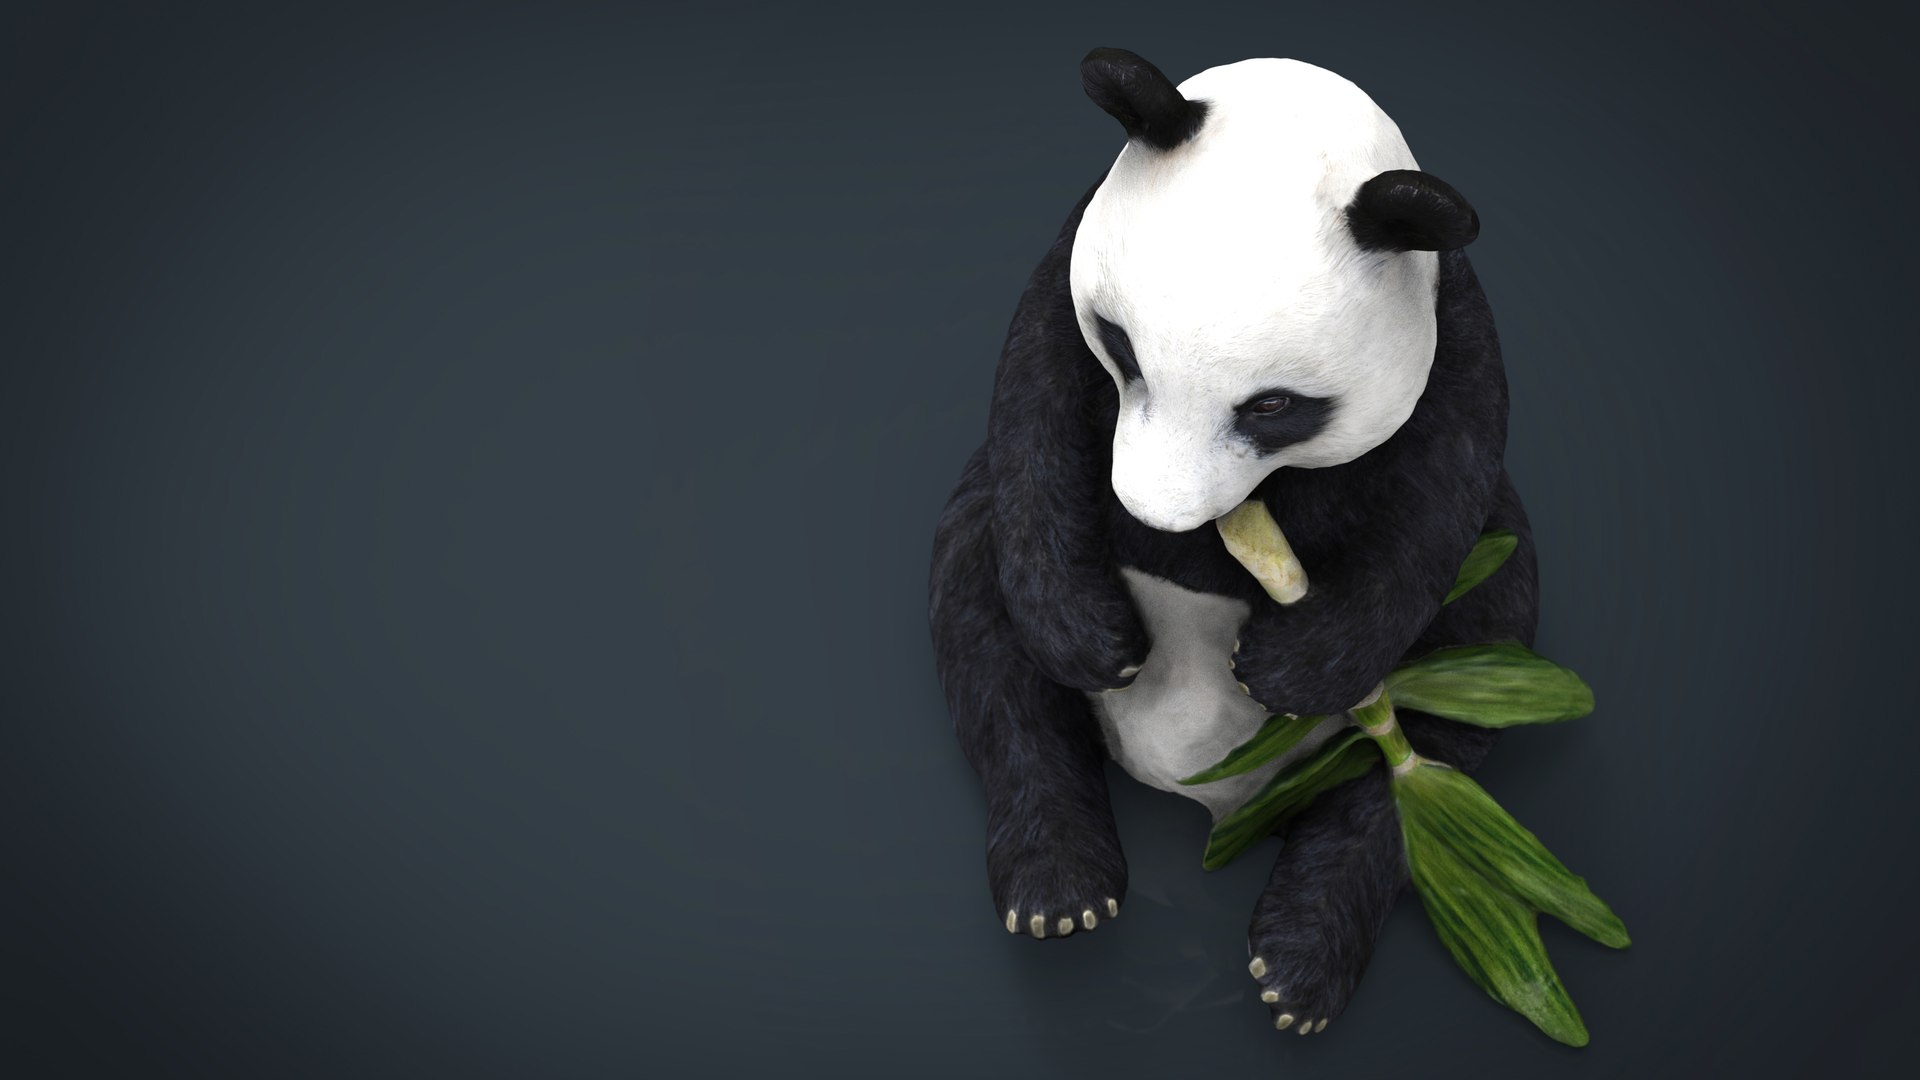 89 Slim Panda Images, Stock Photos, 3D objects, & Vectors